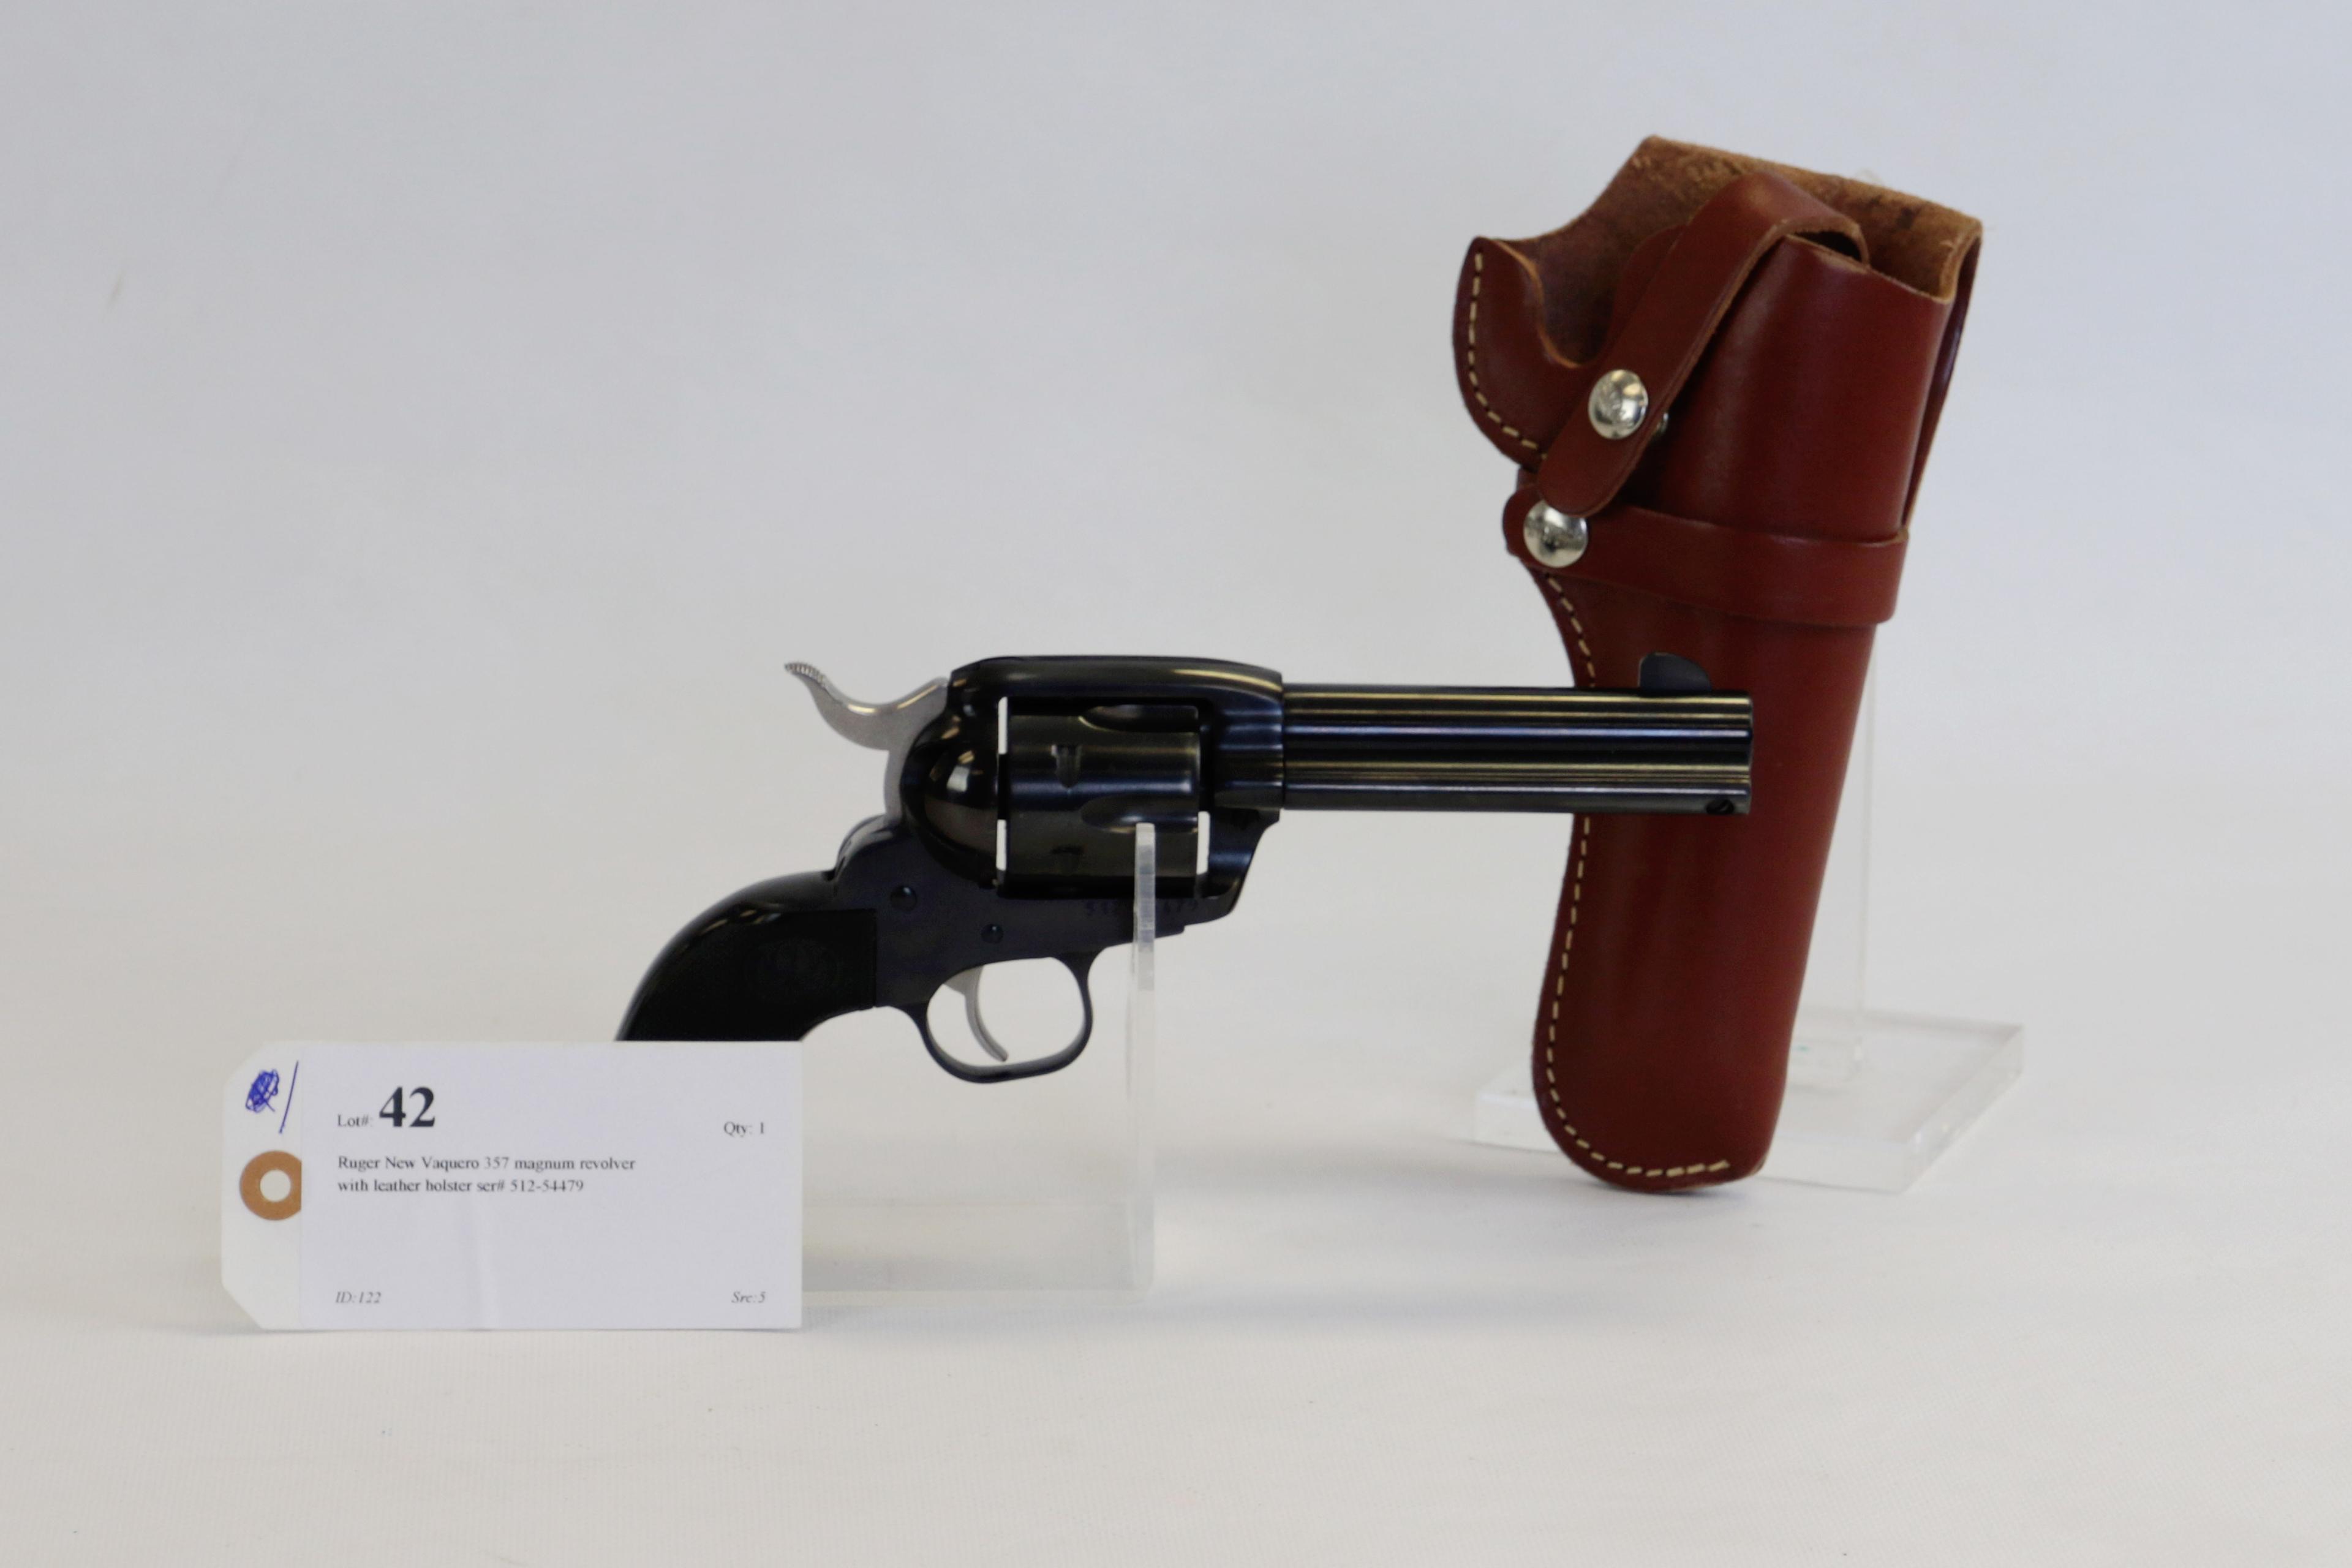 Ruger New Vaquero 357 magnum revolver